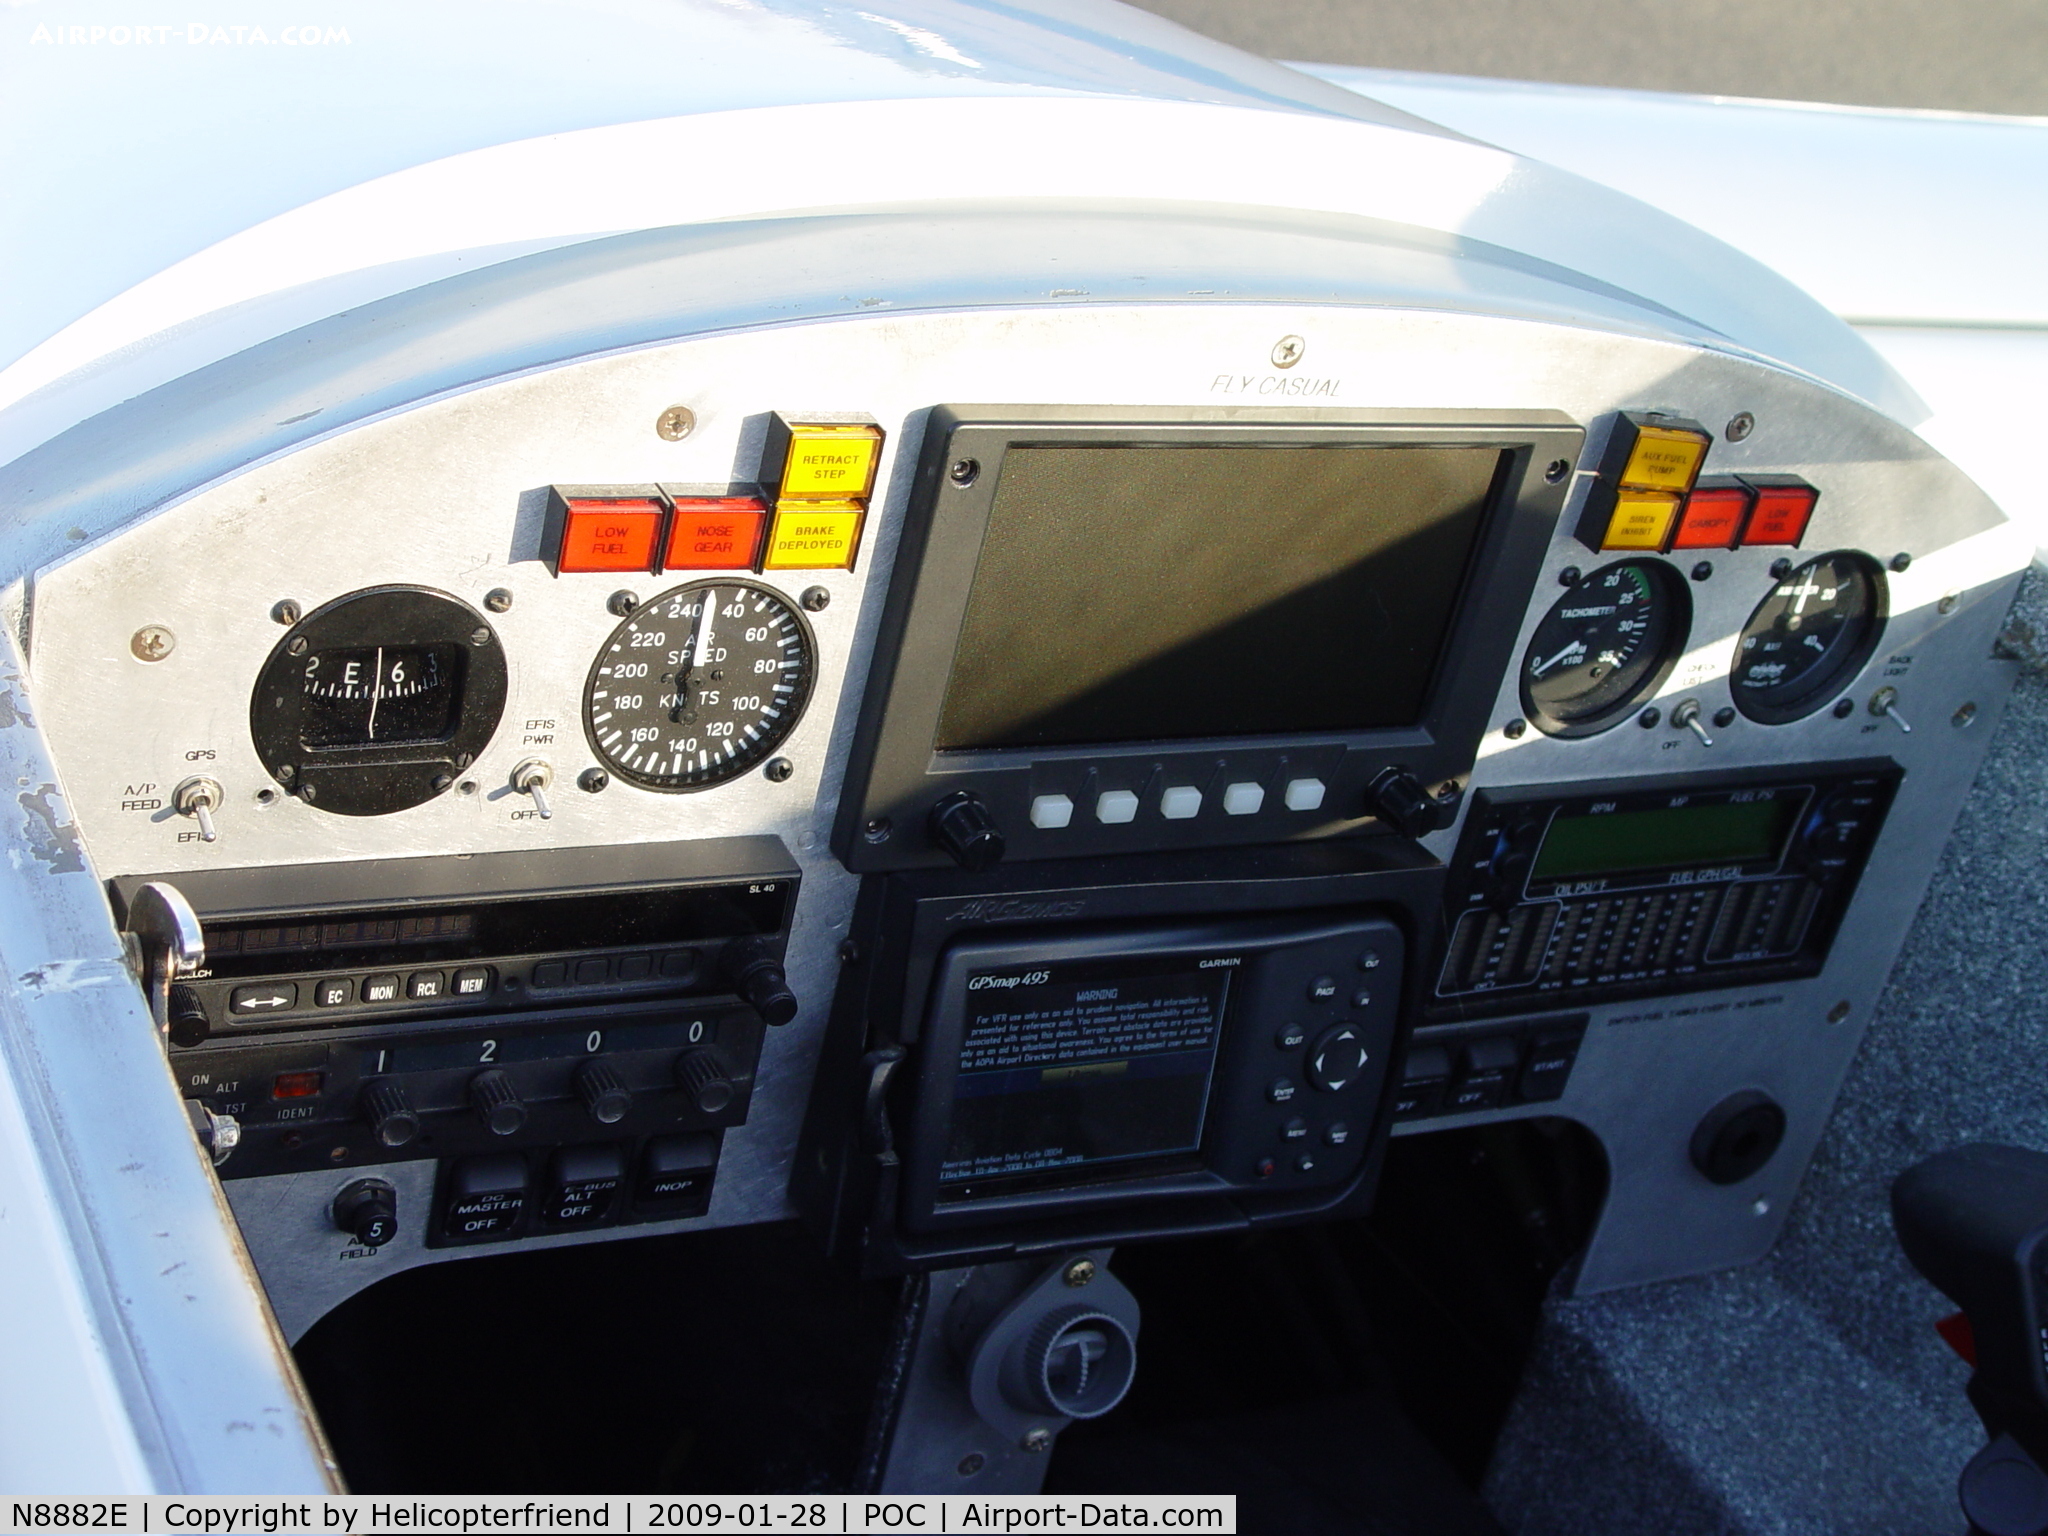 N8882E, 2008 Rutan Long-EZ C/N 001 (N8882E), Instrument Panel (note in center - 